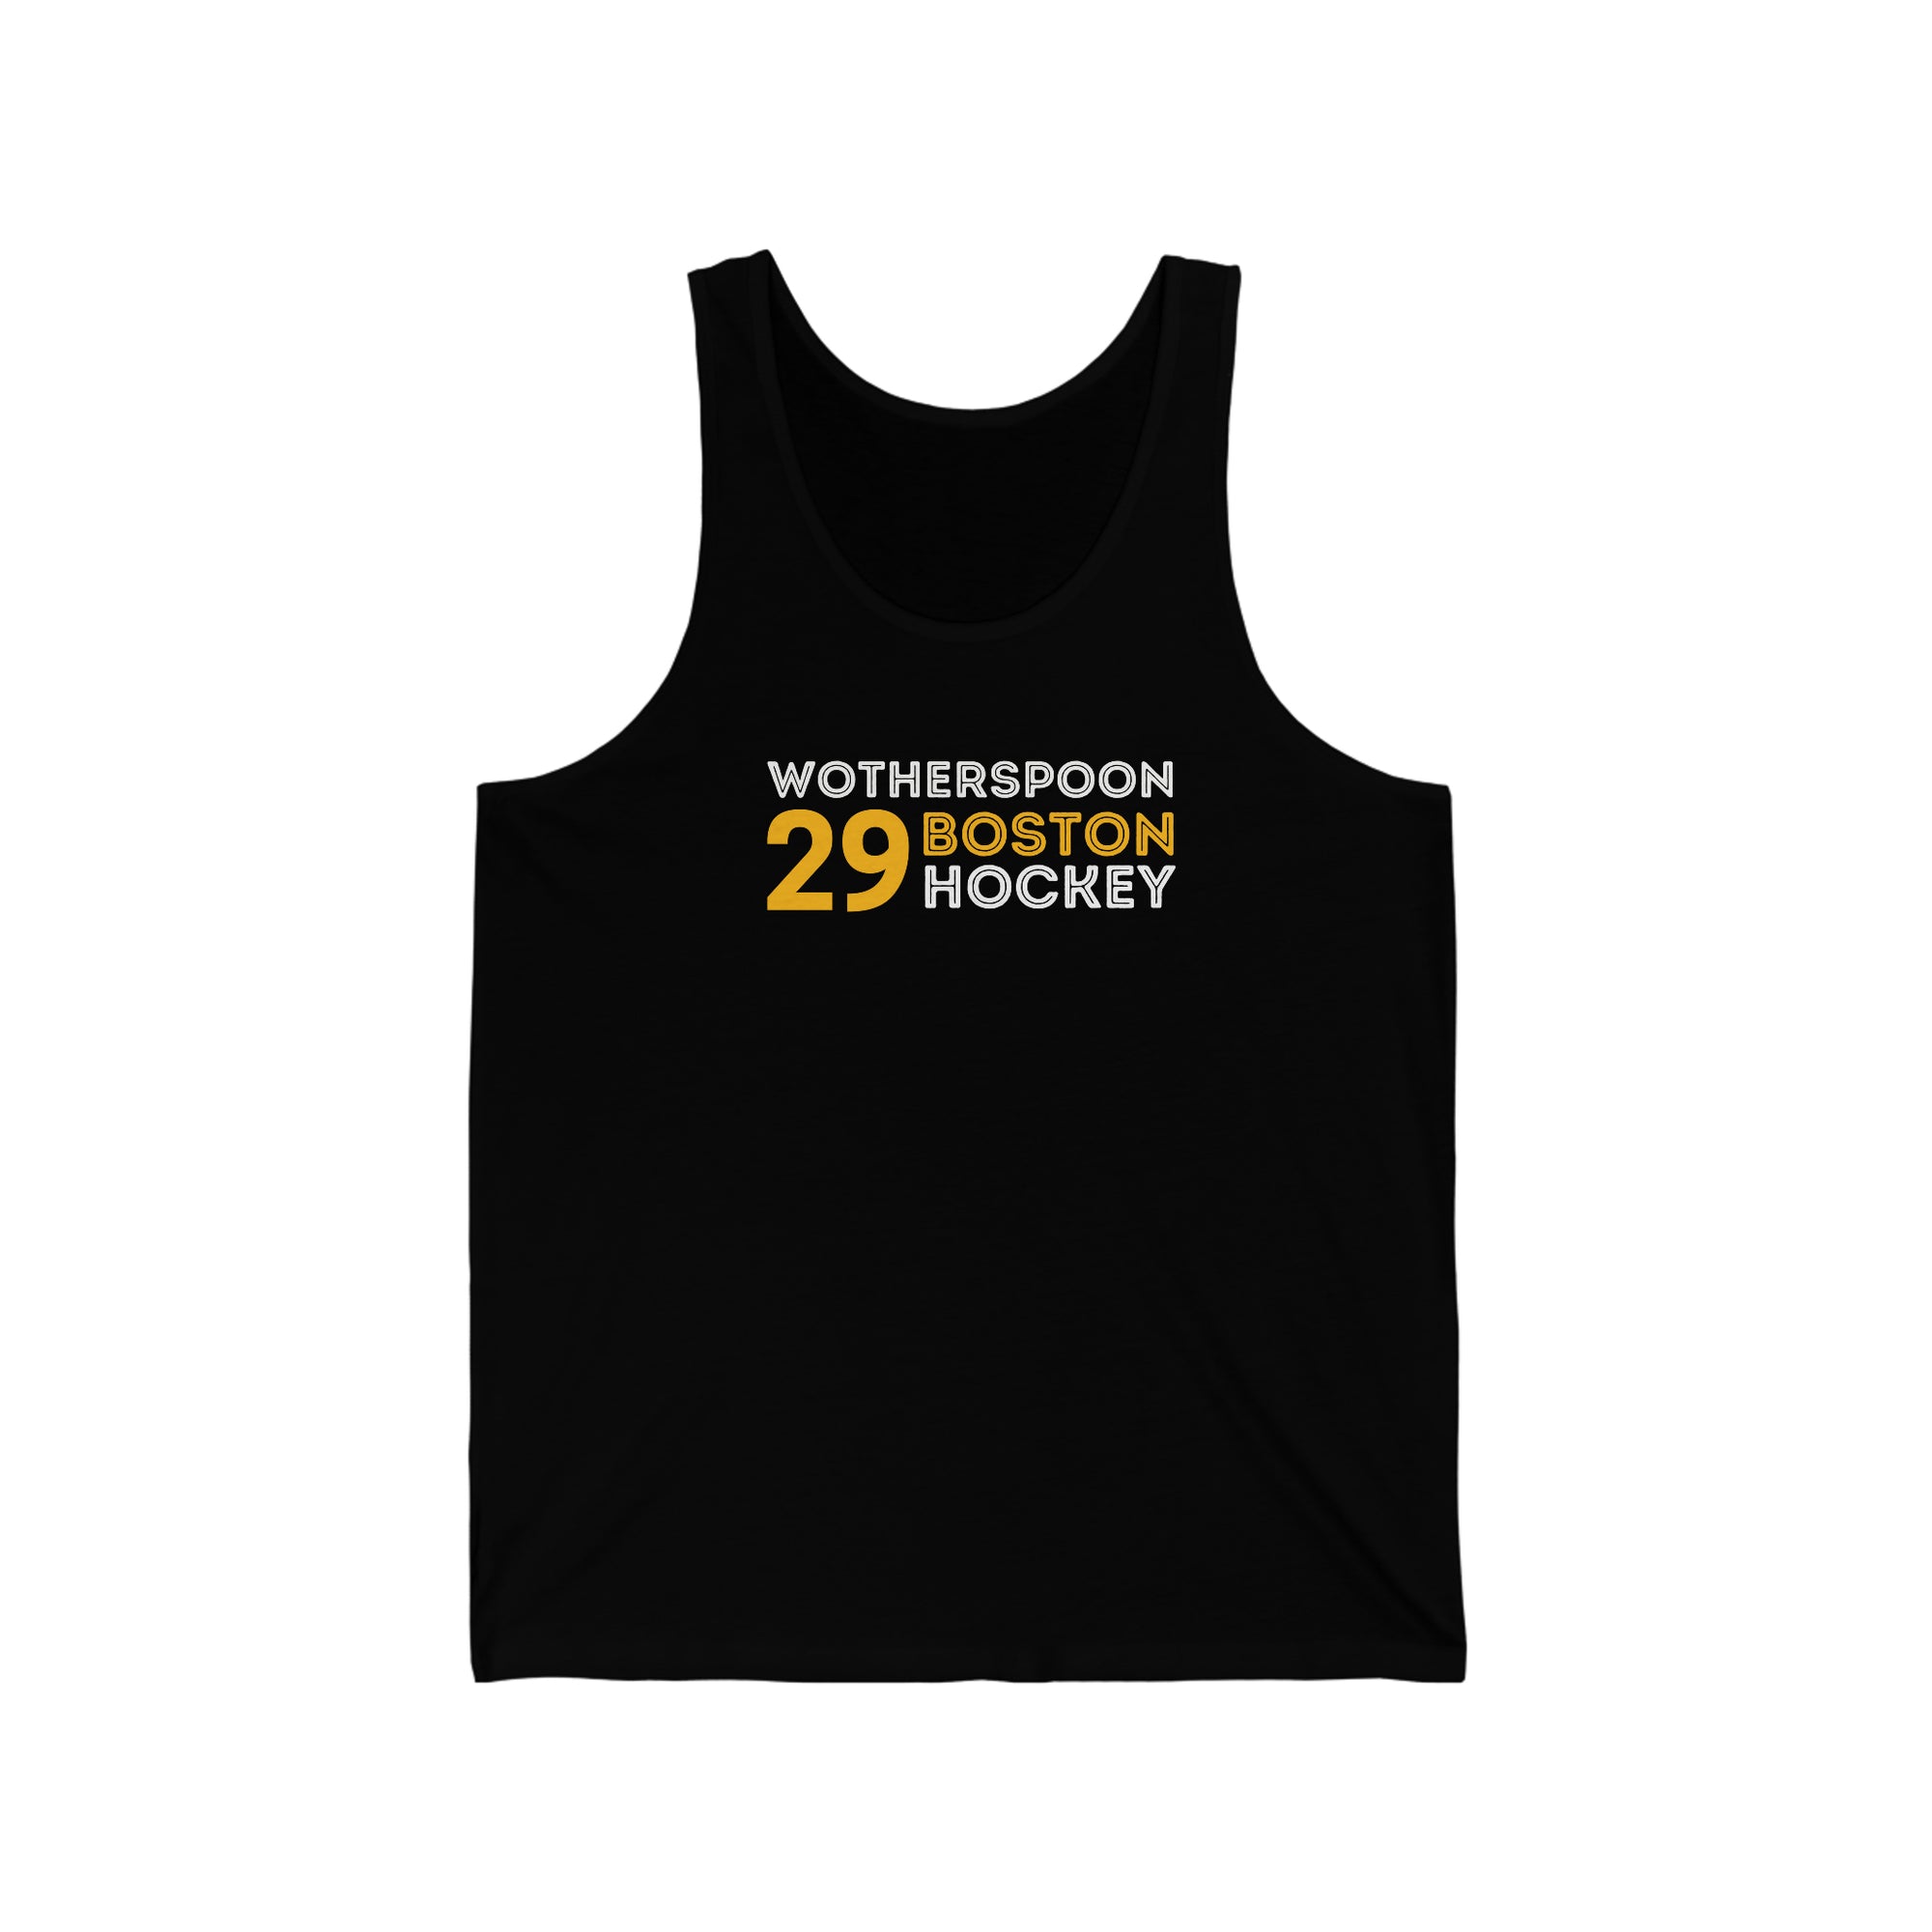 Wotherspoon 29 Boston Hockey Grafitti Wall Design Unisex Jersey Tank Top